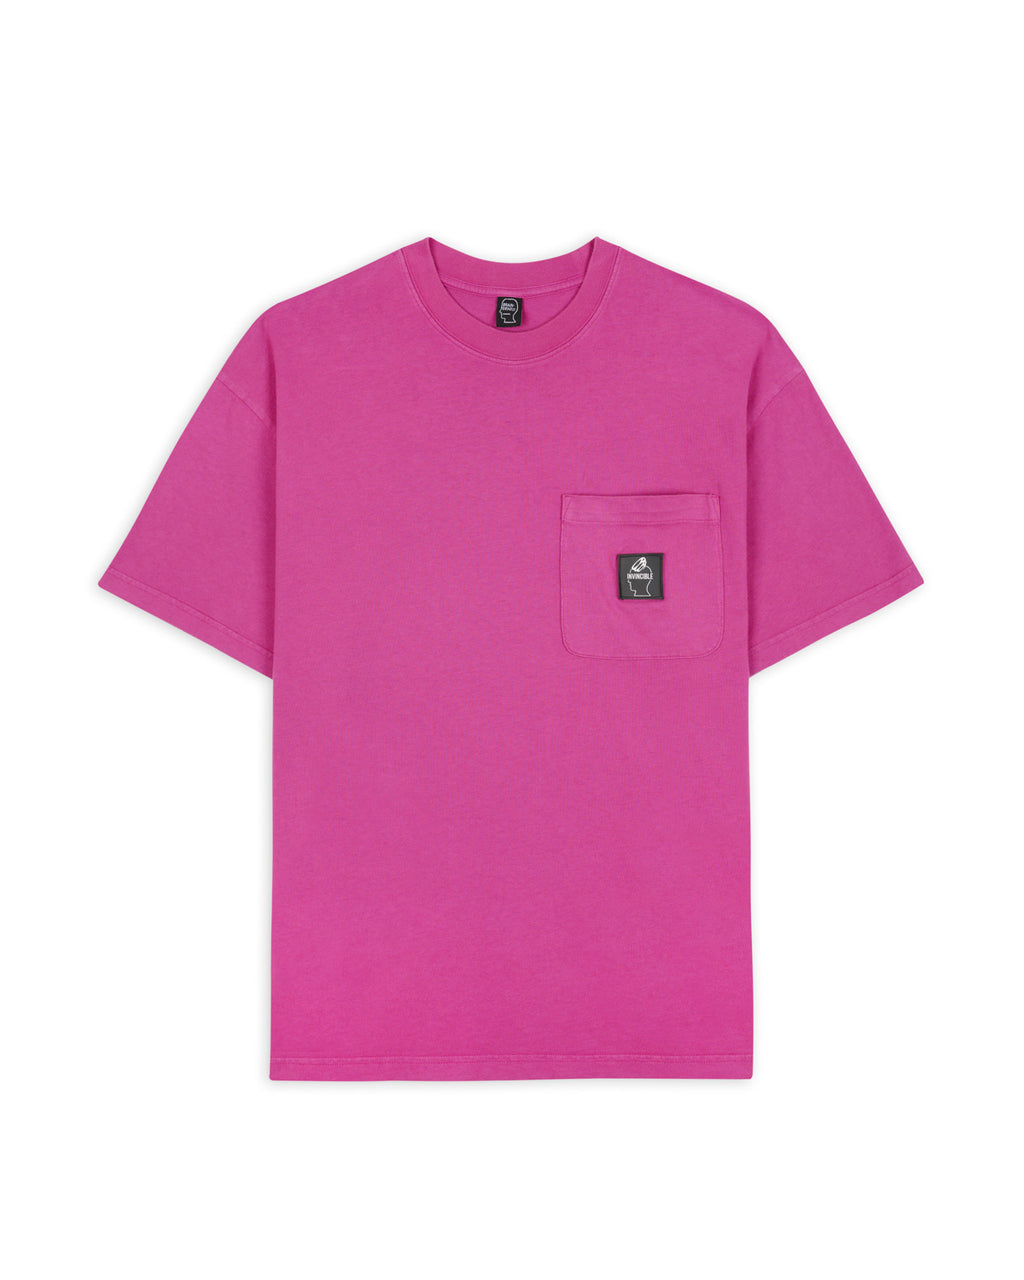 Brain Dead x Invincible Equipment T-Shirt - Pink